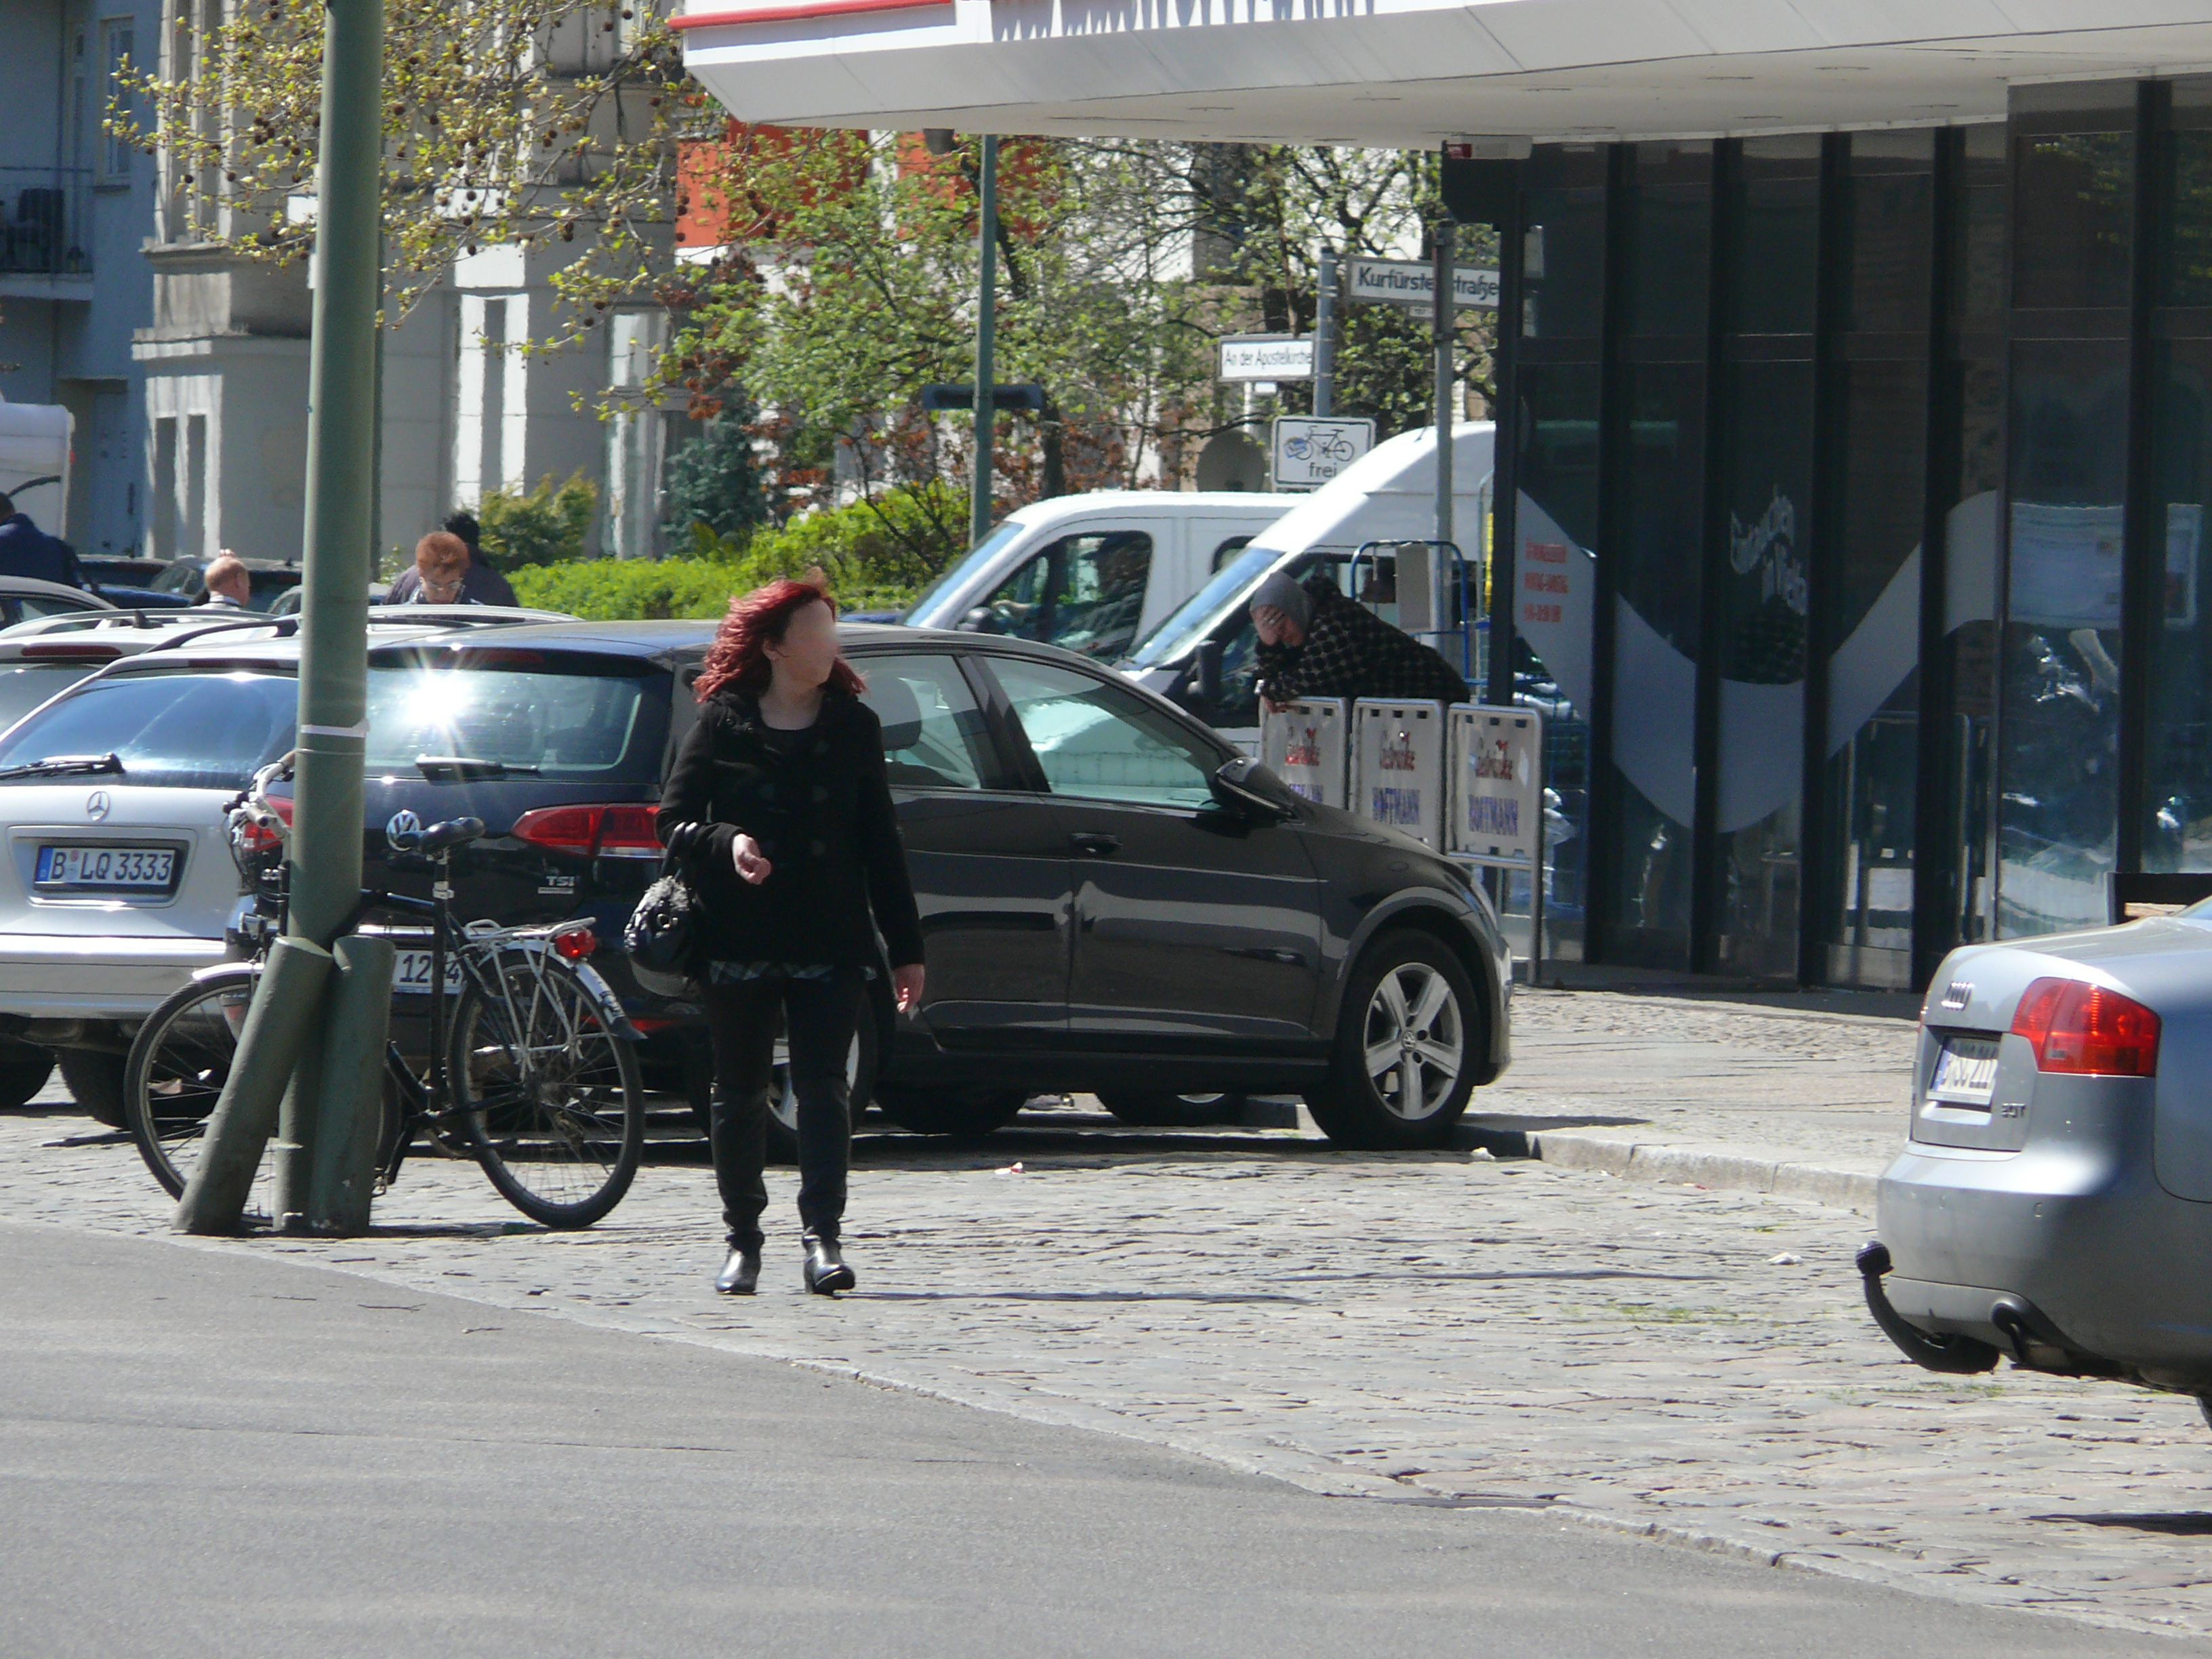 Kontrolle: Prostitution in Gelsenkirchen trotz Lockdown